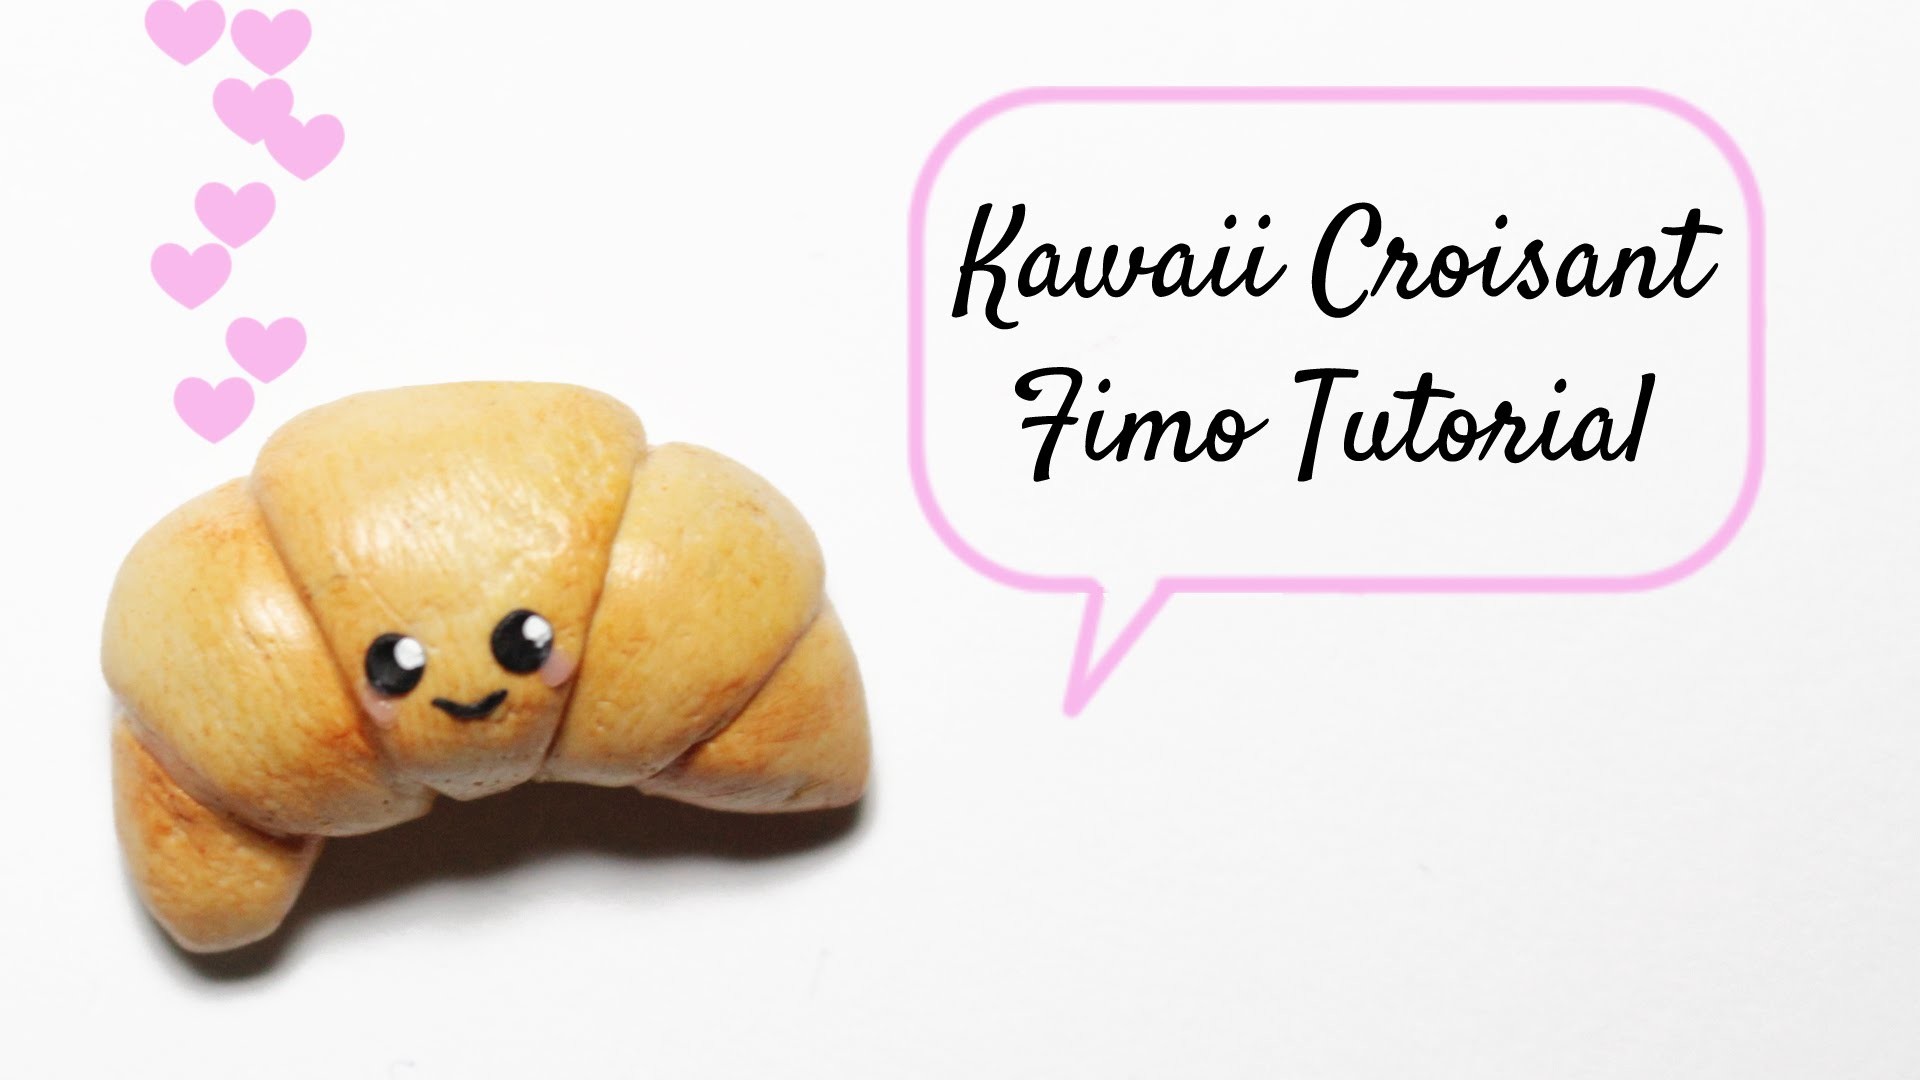 [Fimo Friday] Kawaii Croissant Fimo Tutorial. Kawaii Croissant polymer clay tutorial | Anielas Fimo